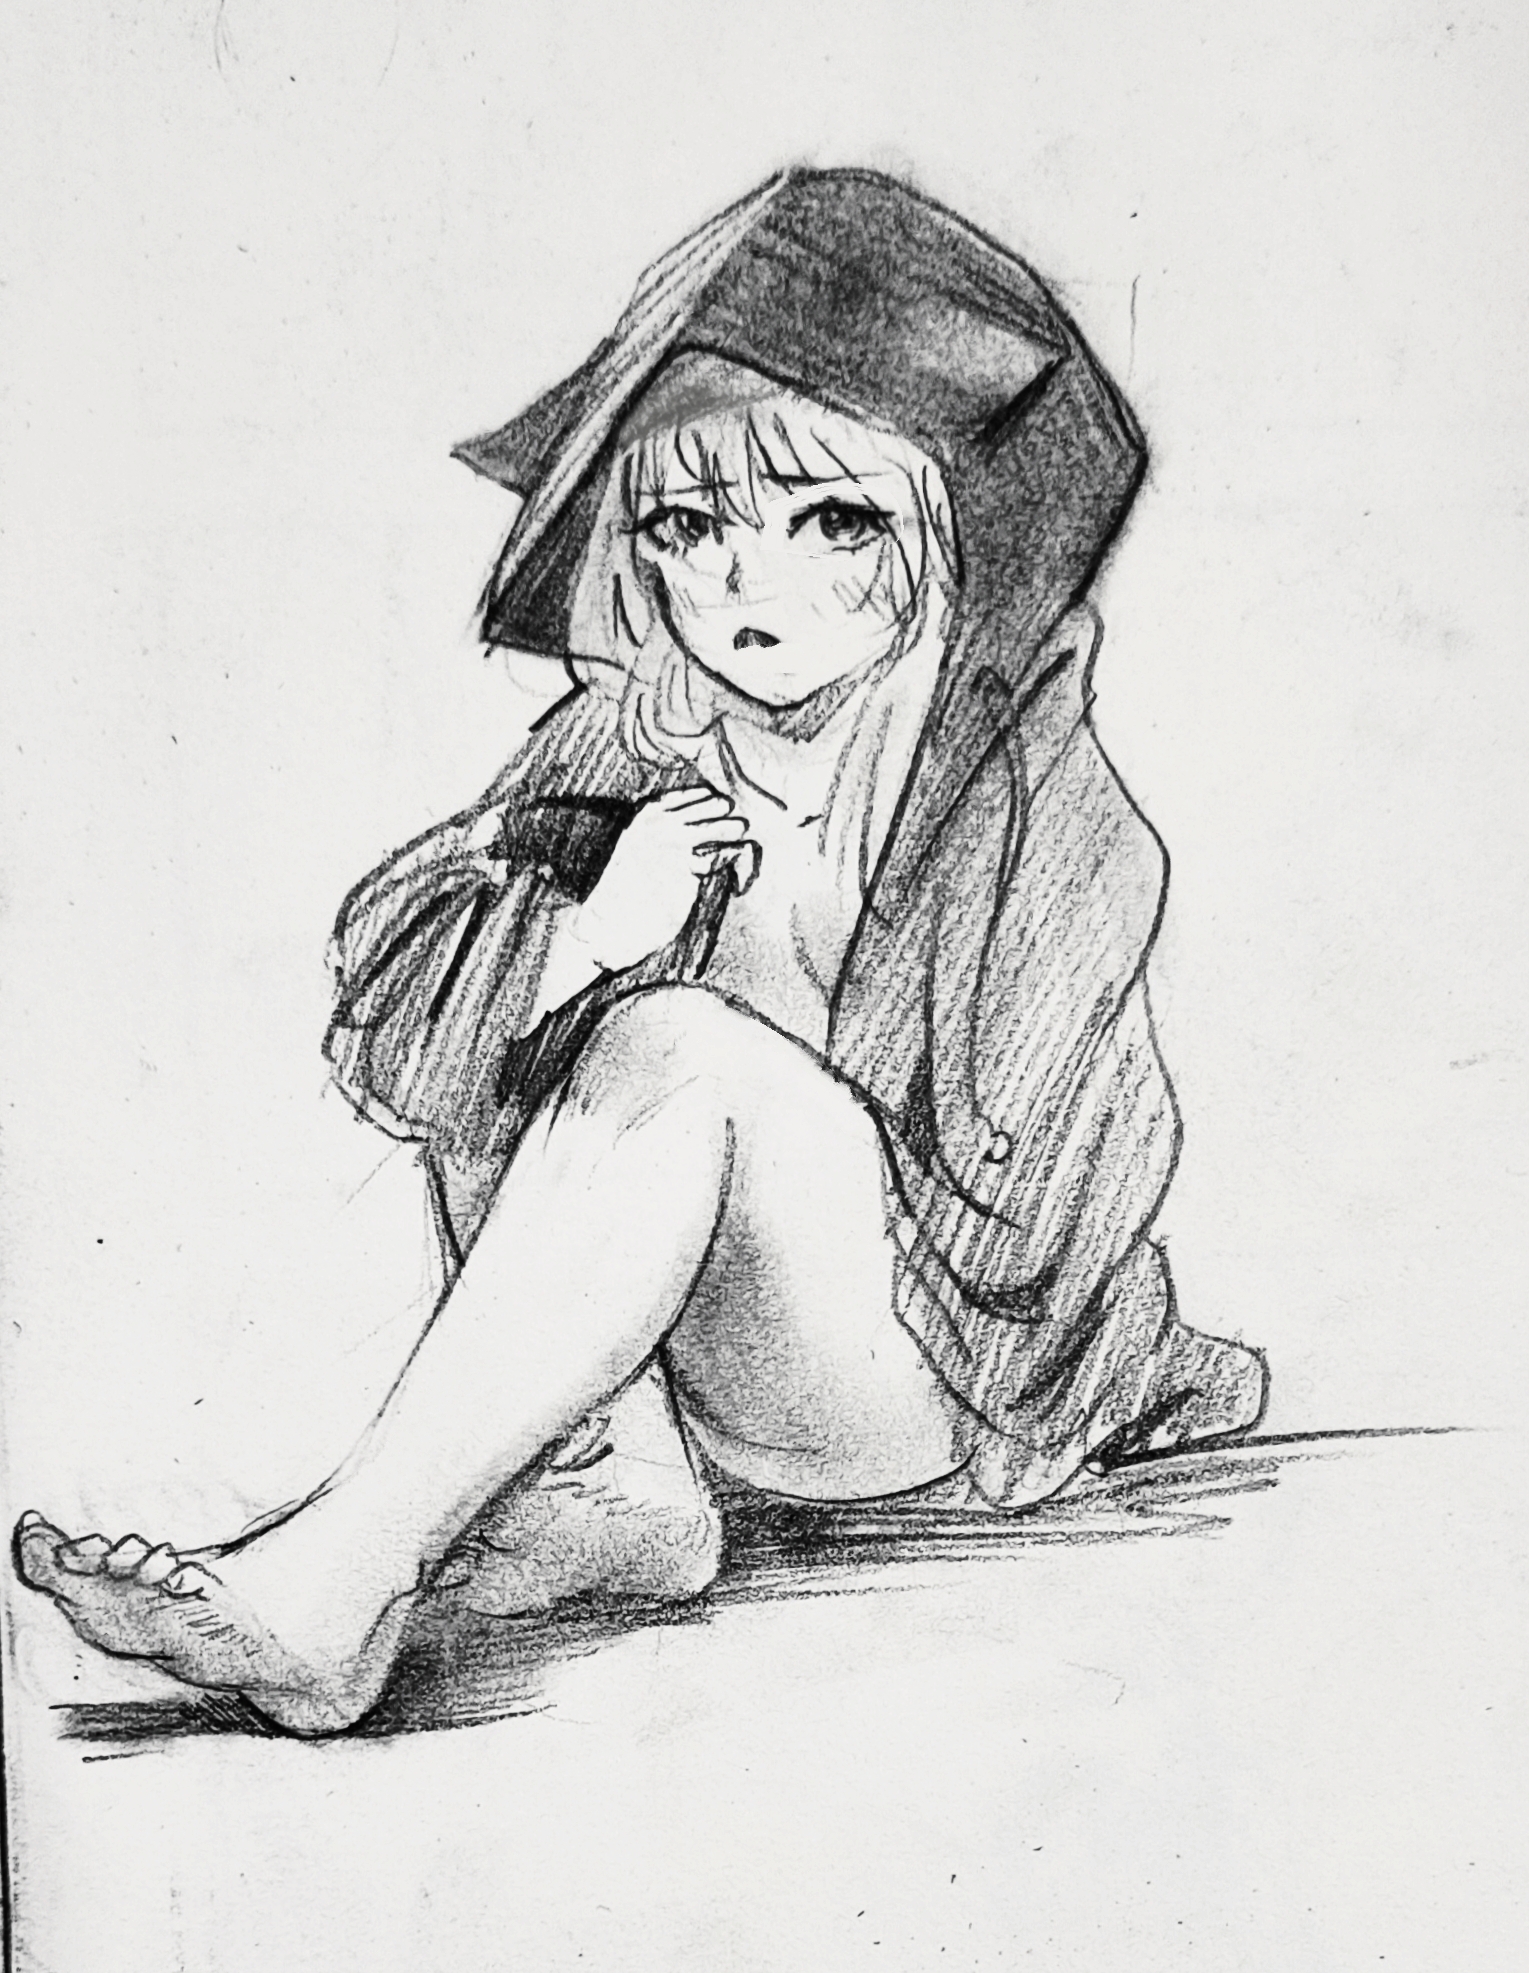 NANA (Series) - Yazawa Ai - Image #184771 - Zerochan Anime Image Board